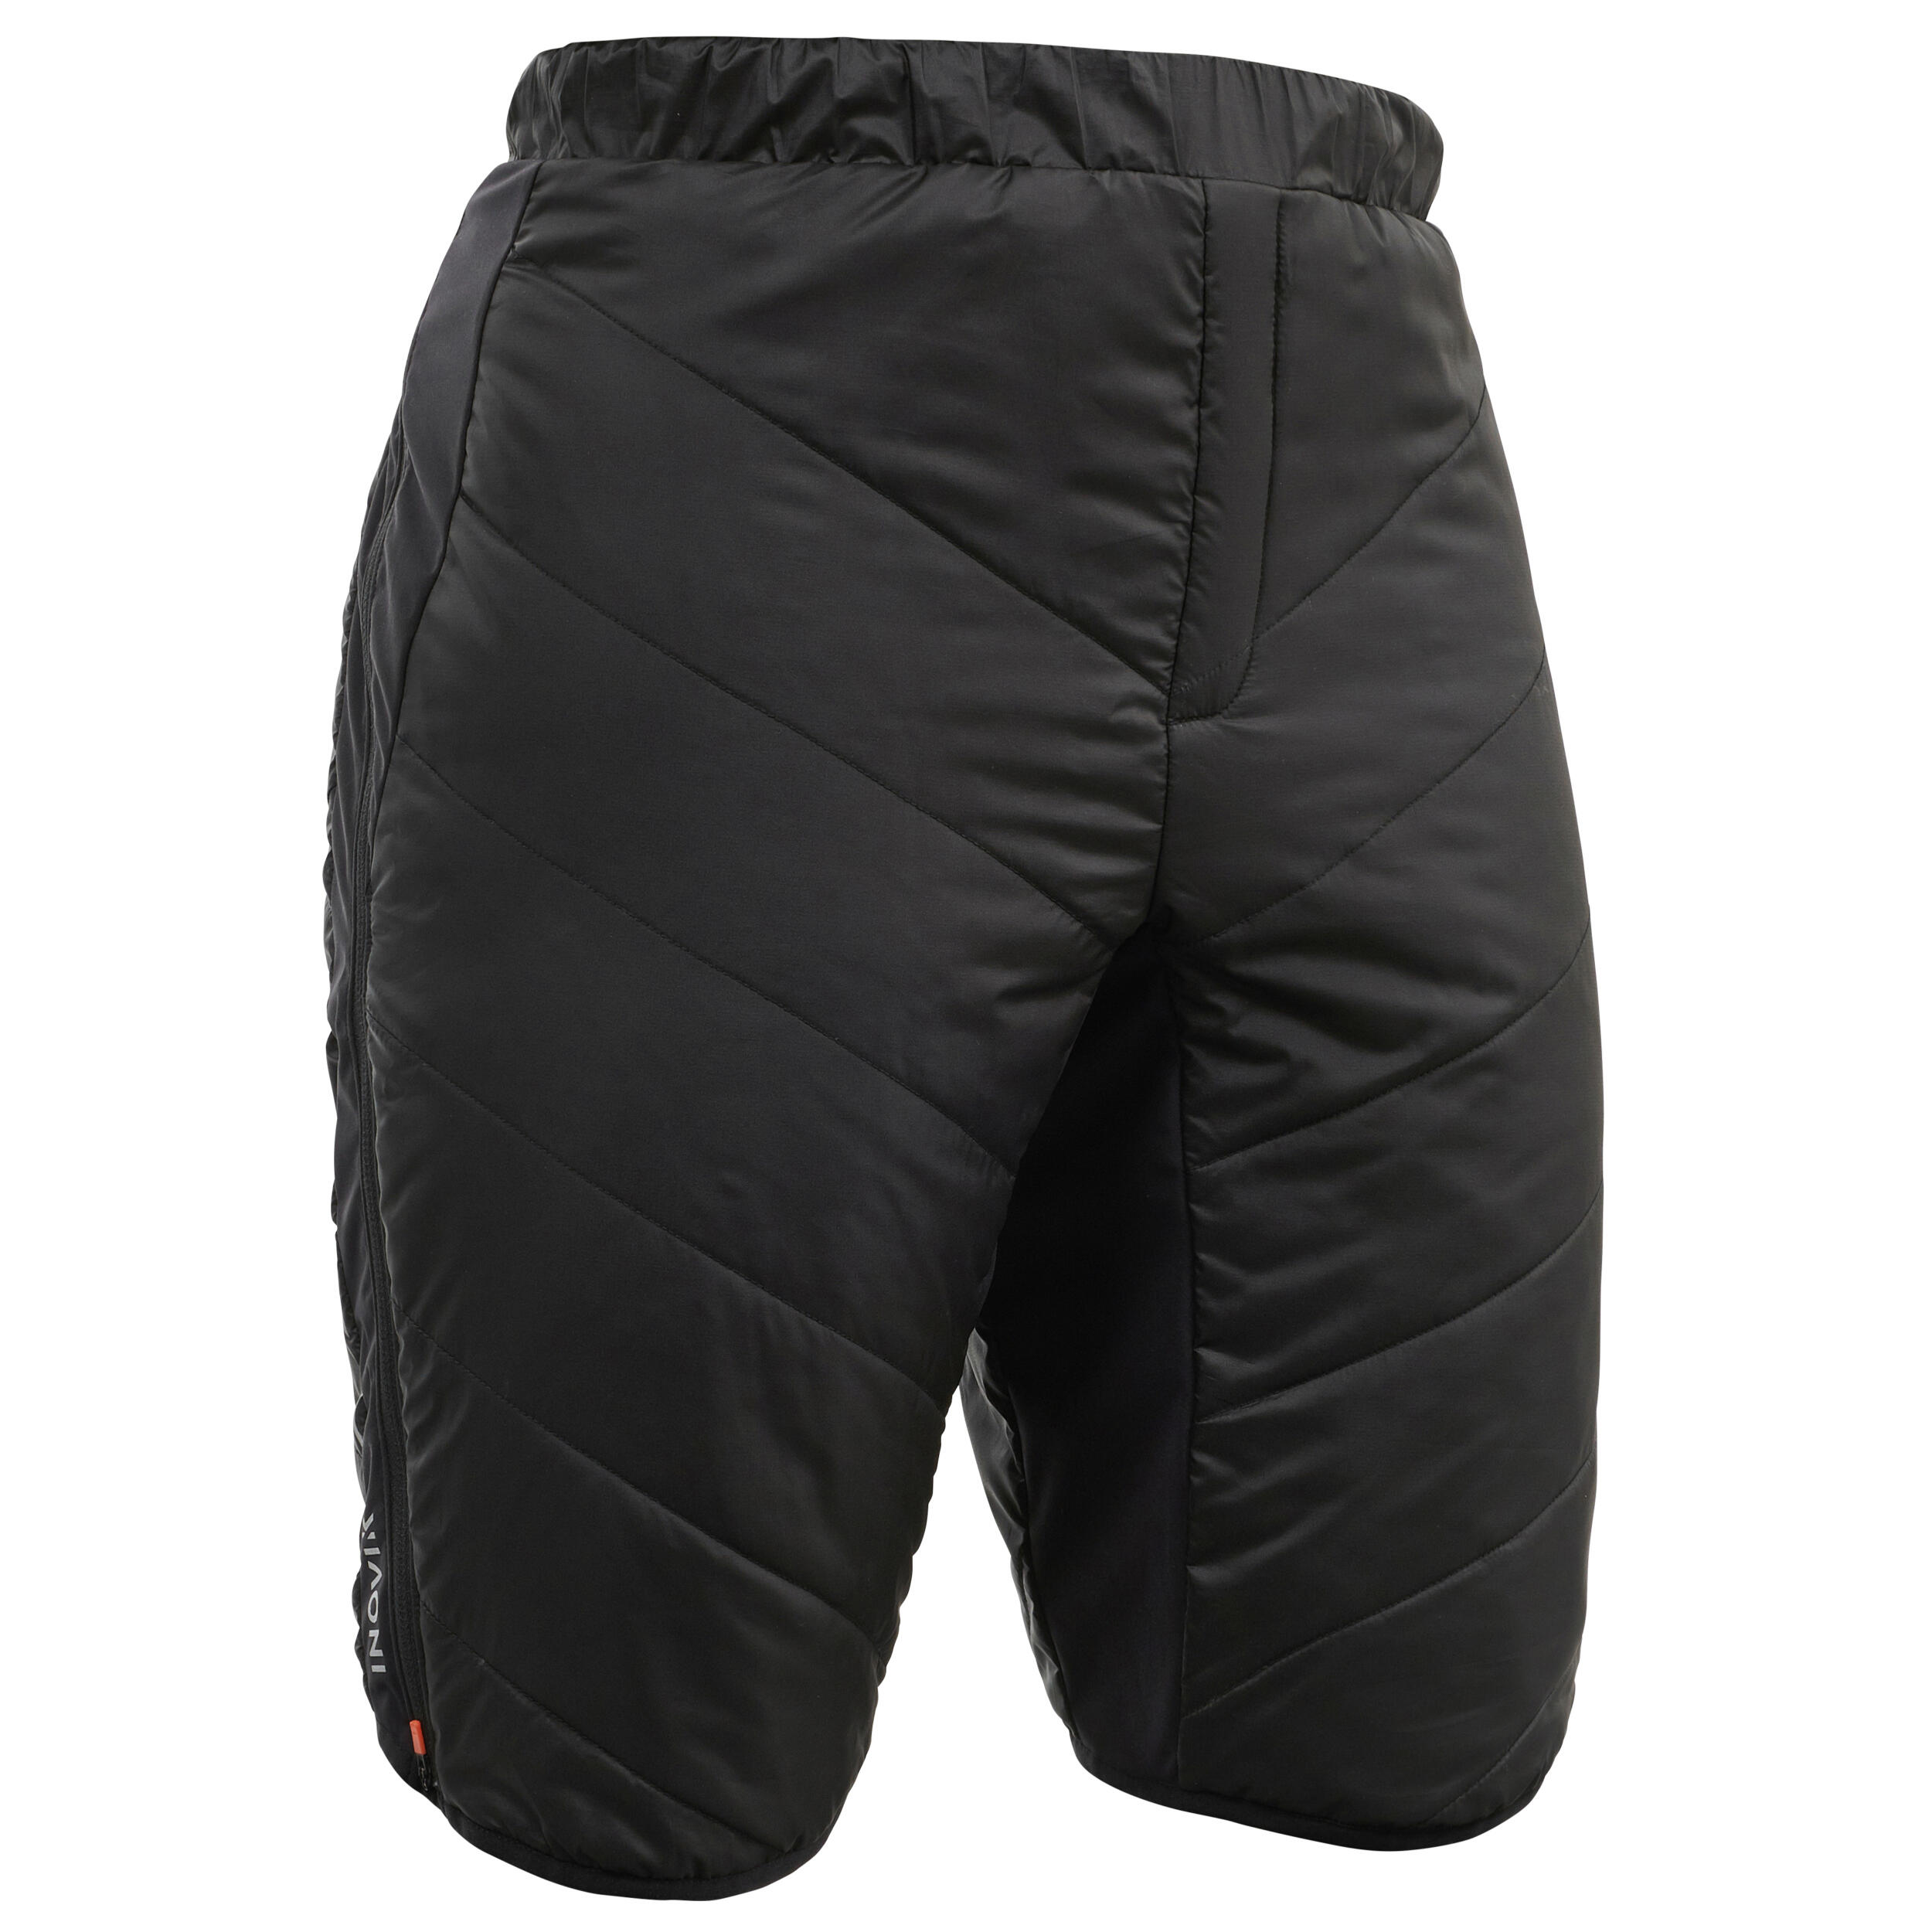 decathlon waterproof shorts